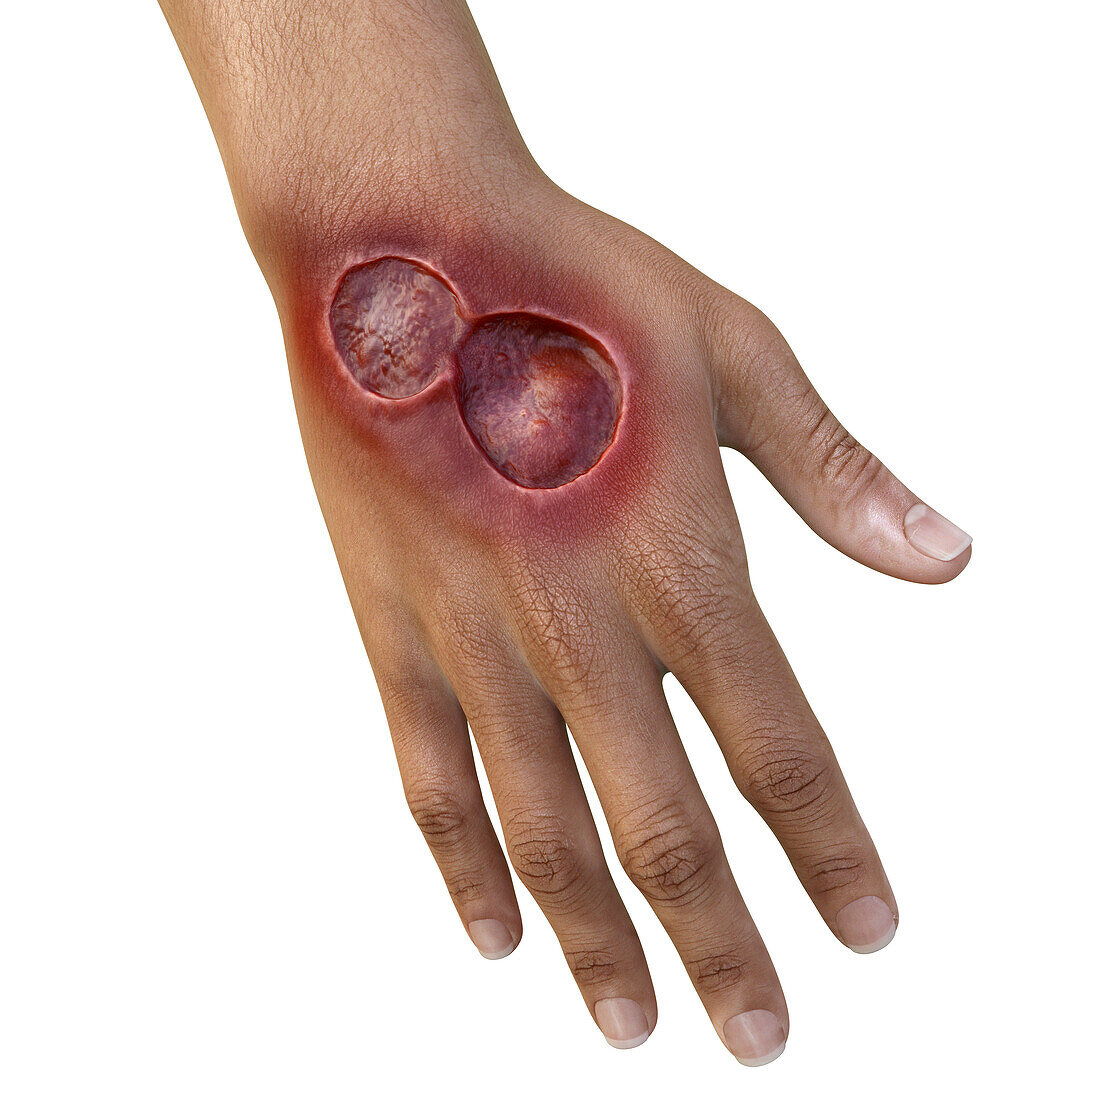 Buruli ulcer on a hand, illustration